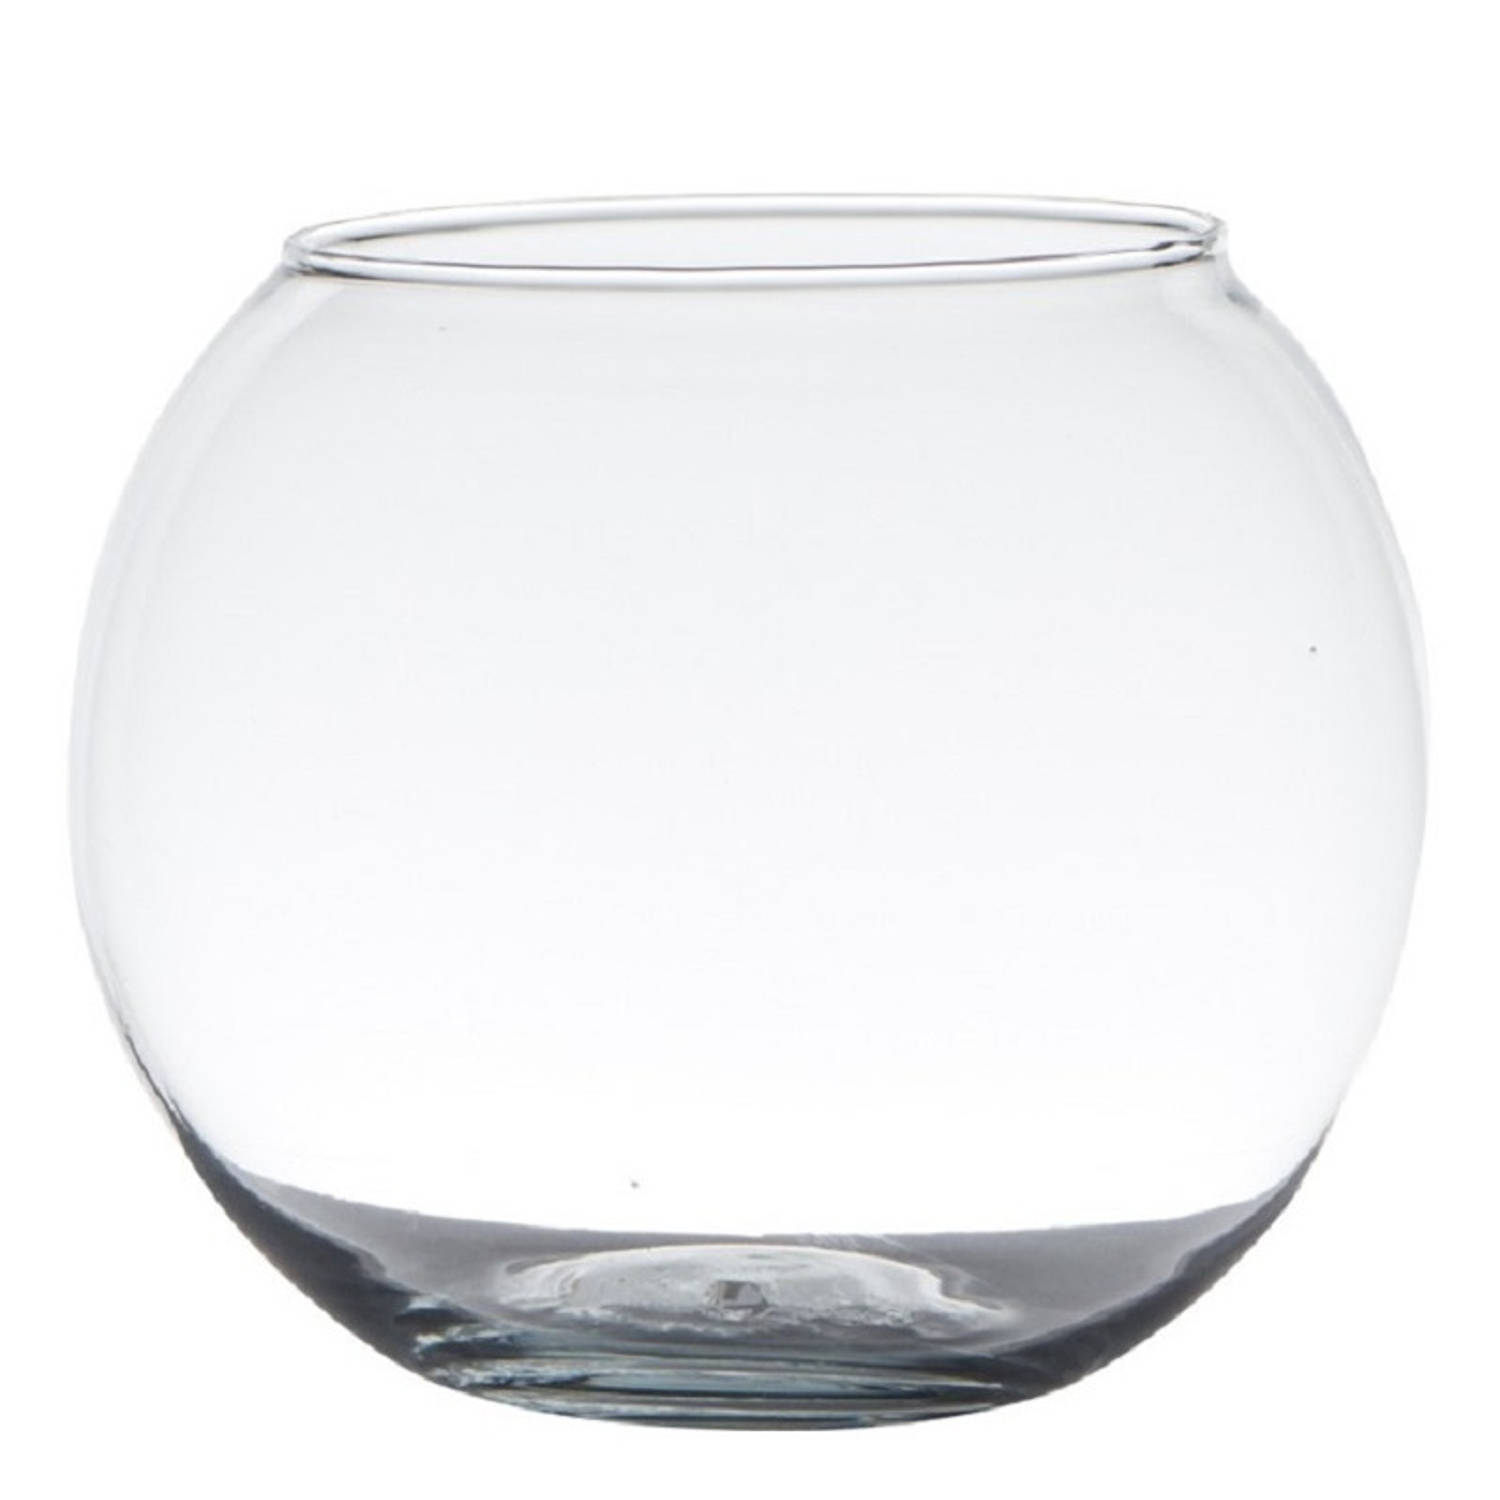 Hakbijl glas - Transparante kaarsenhouder/waxinelichtjes houder 7 x 9 cm